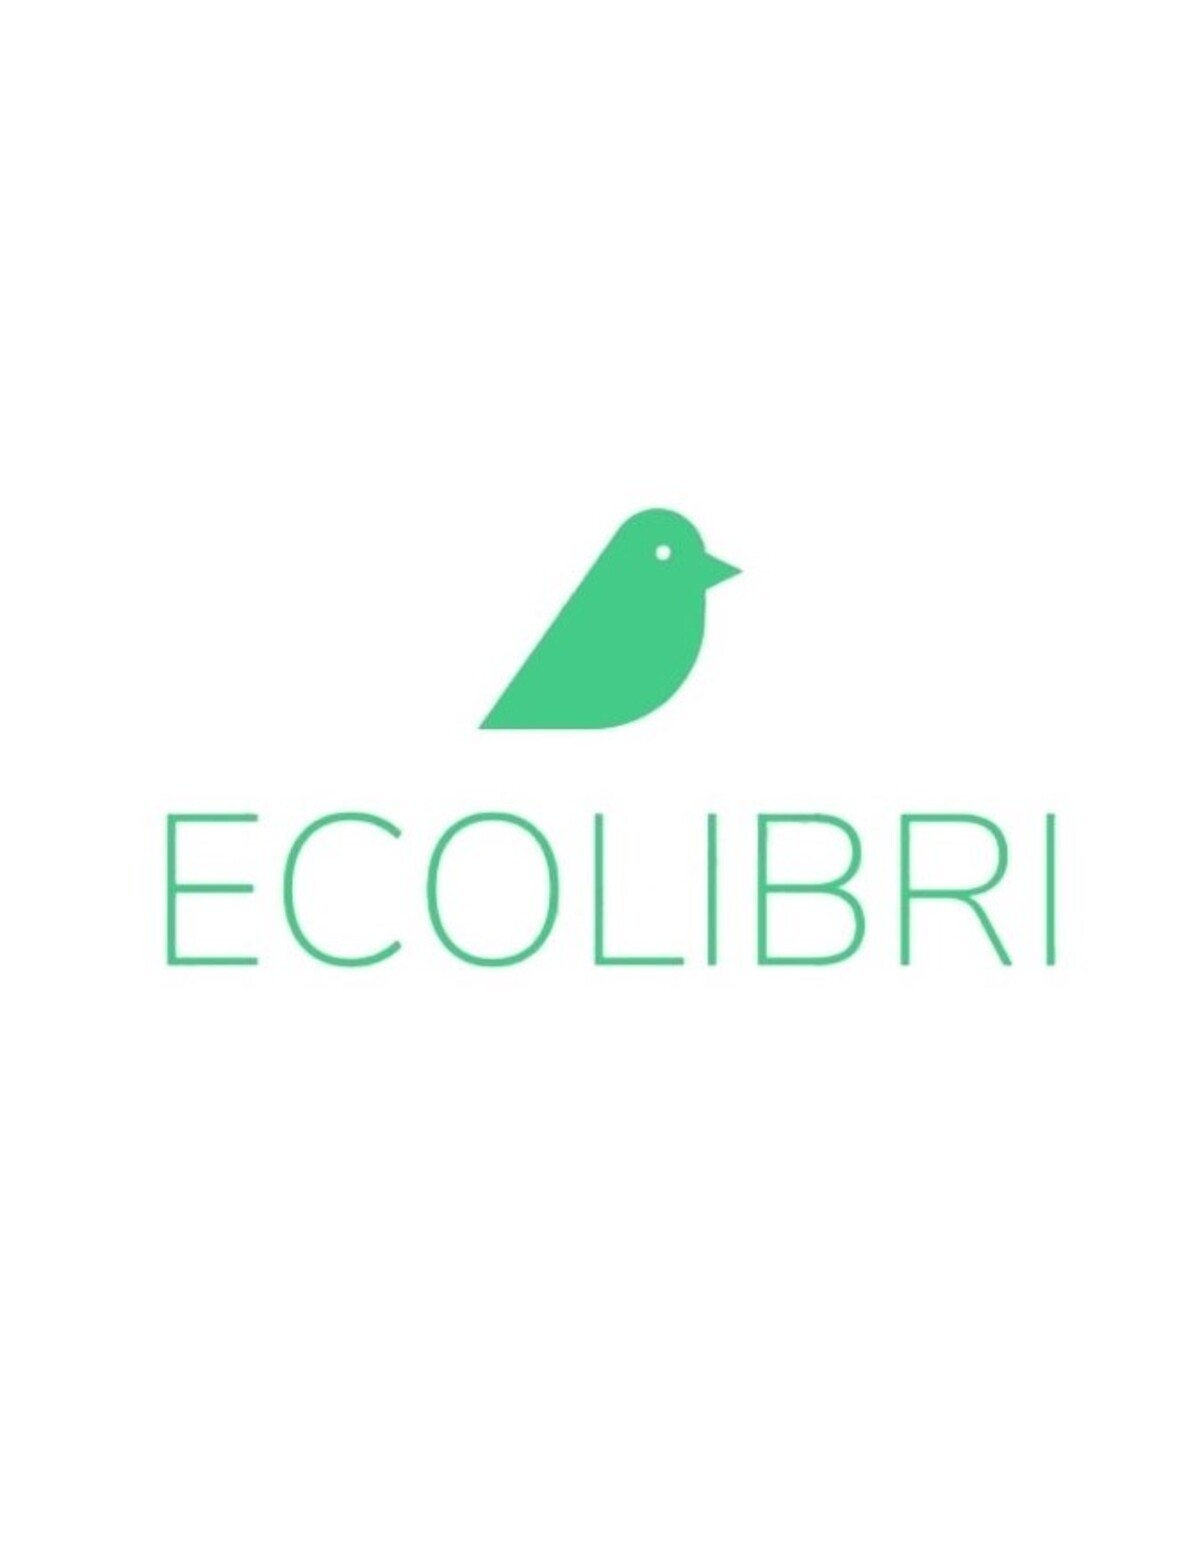 La campagne de socio financement Ecolibri est lancée sur Indiegogo